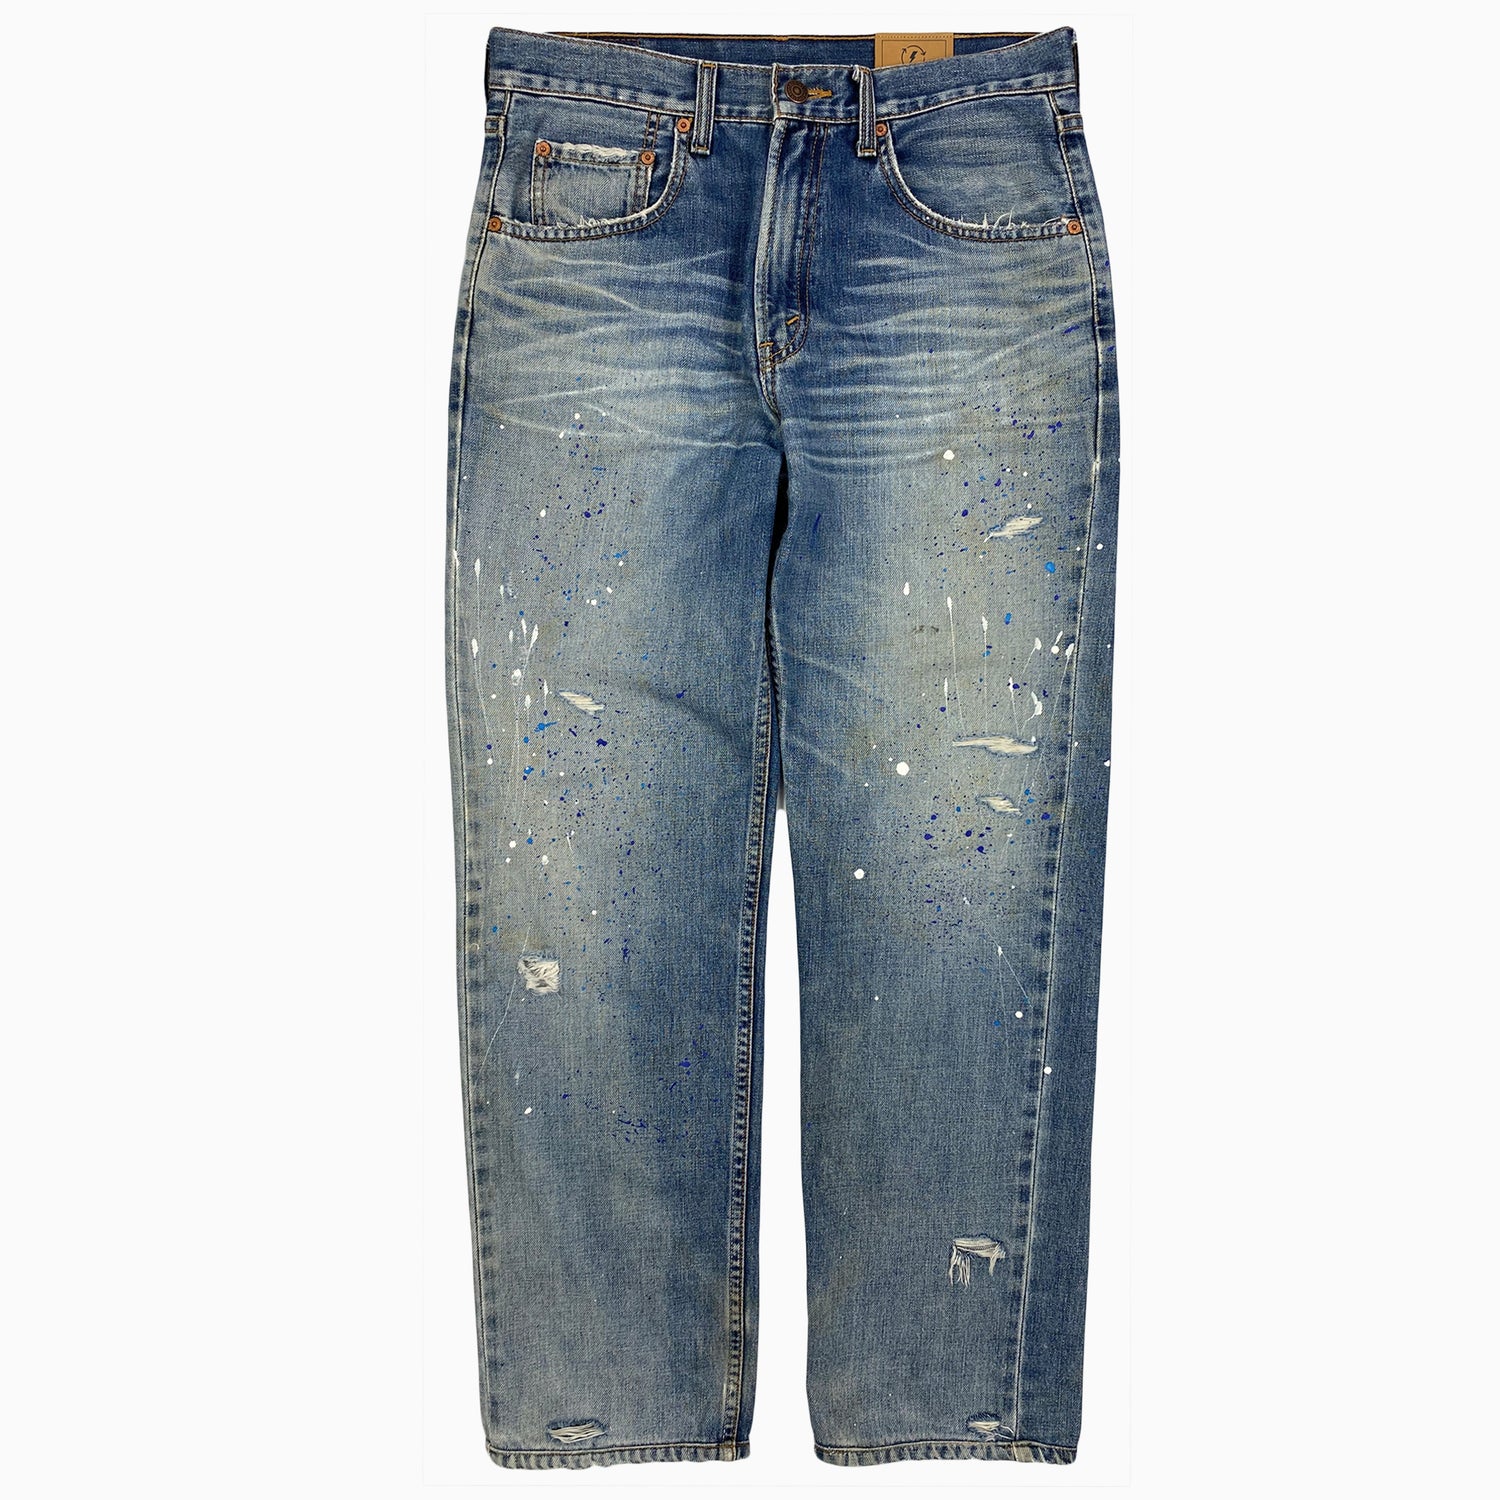 Levi's 506 Blue Paint Splatter Jeans (31 x 31) – denimfaygo